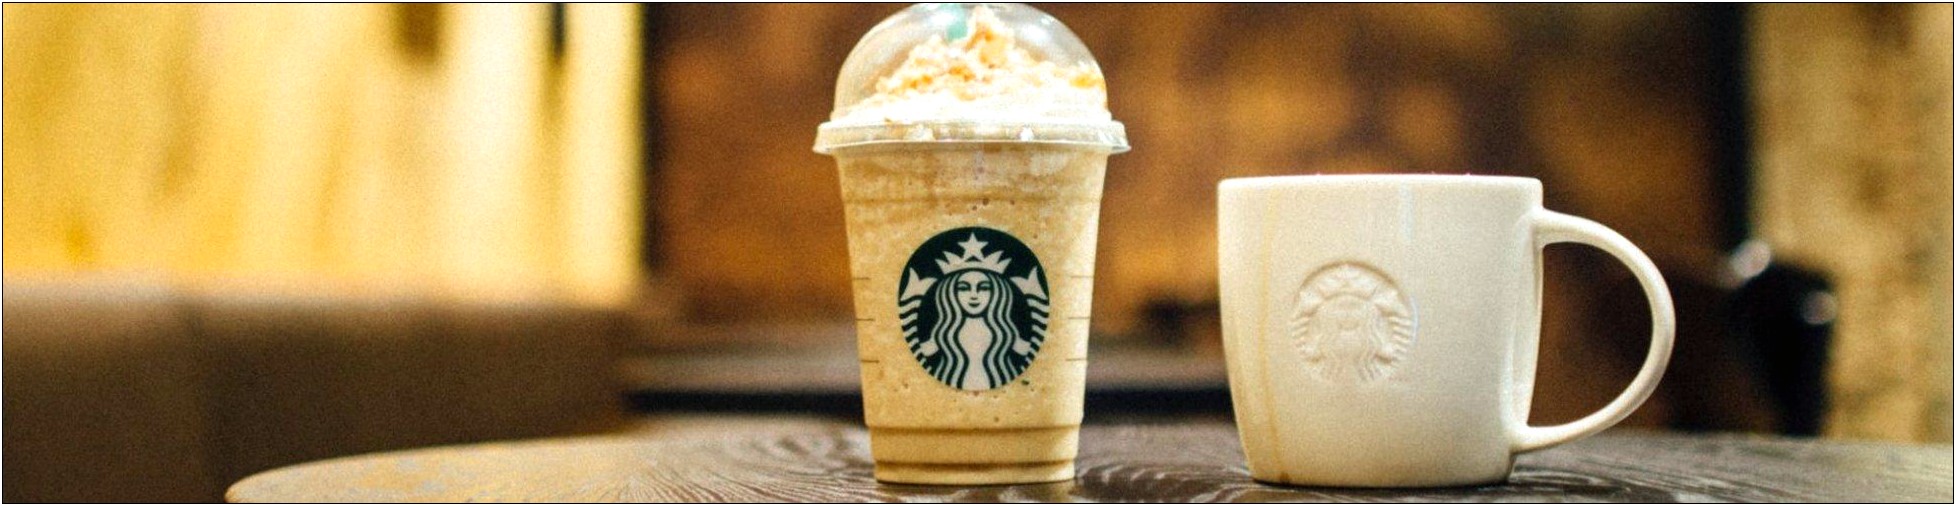 Skills From Starbucks To List On Resume